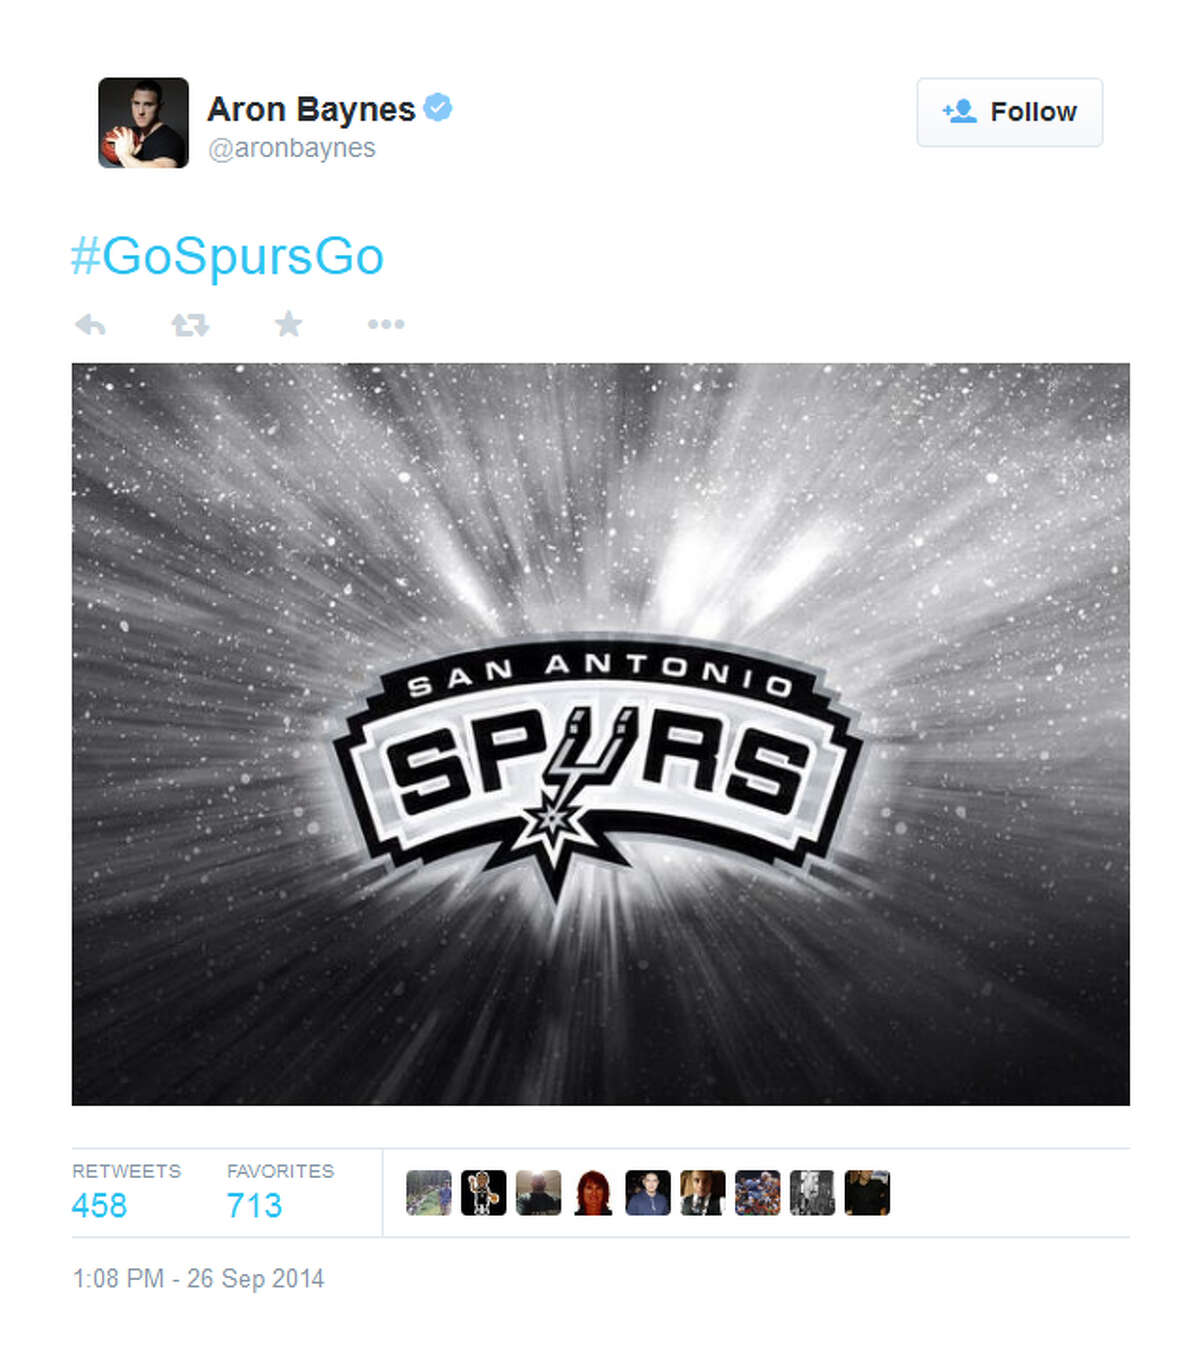 That time he was full of Spurs spirit.Tweet by @aronbaynes